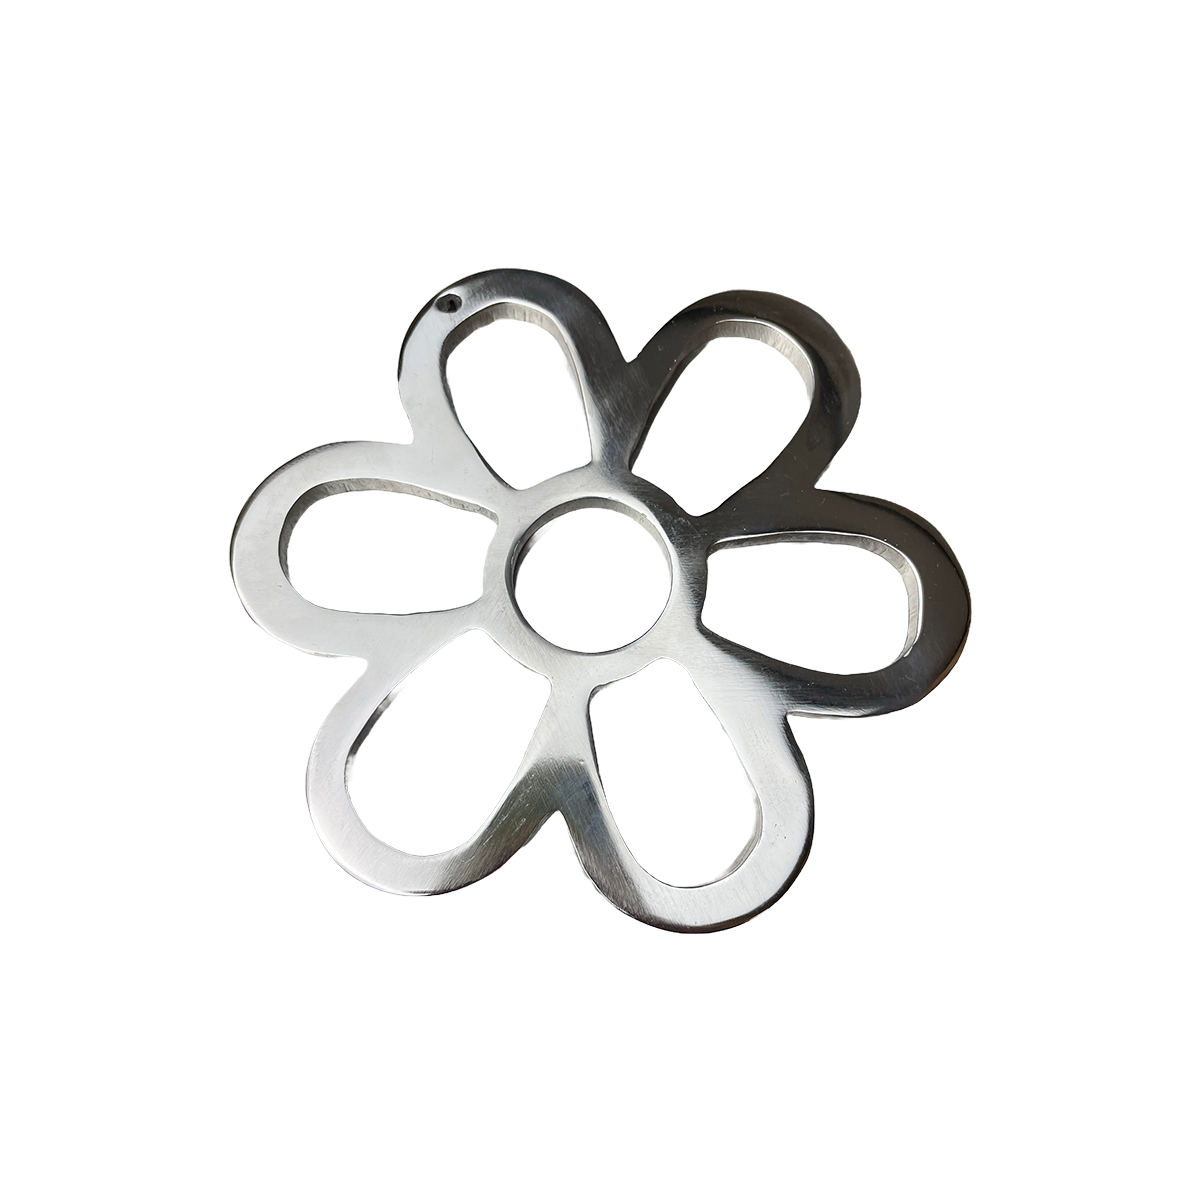 Metal Flower Pendant